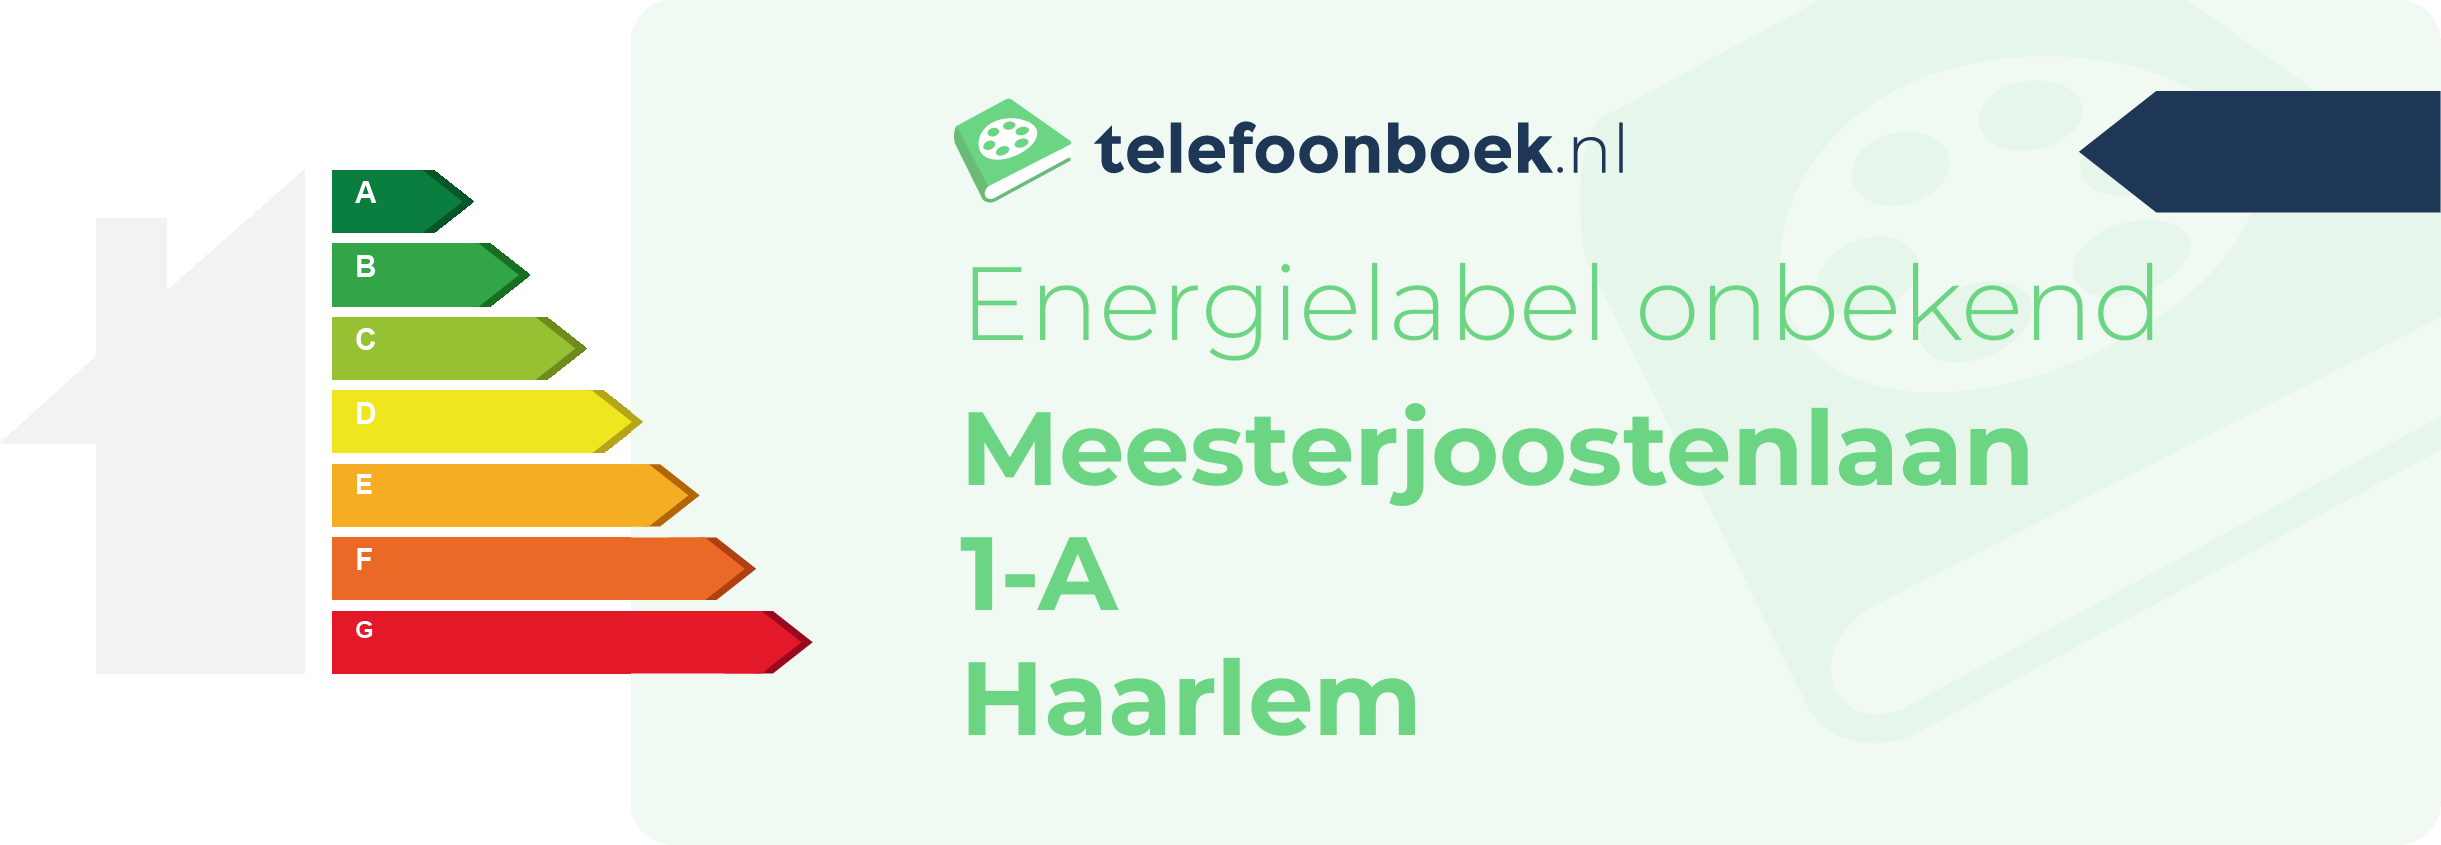 Energielabel Meesterjoostenlaan 1-A Haarlem